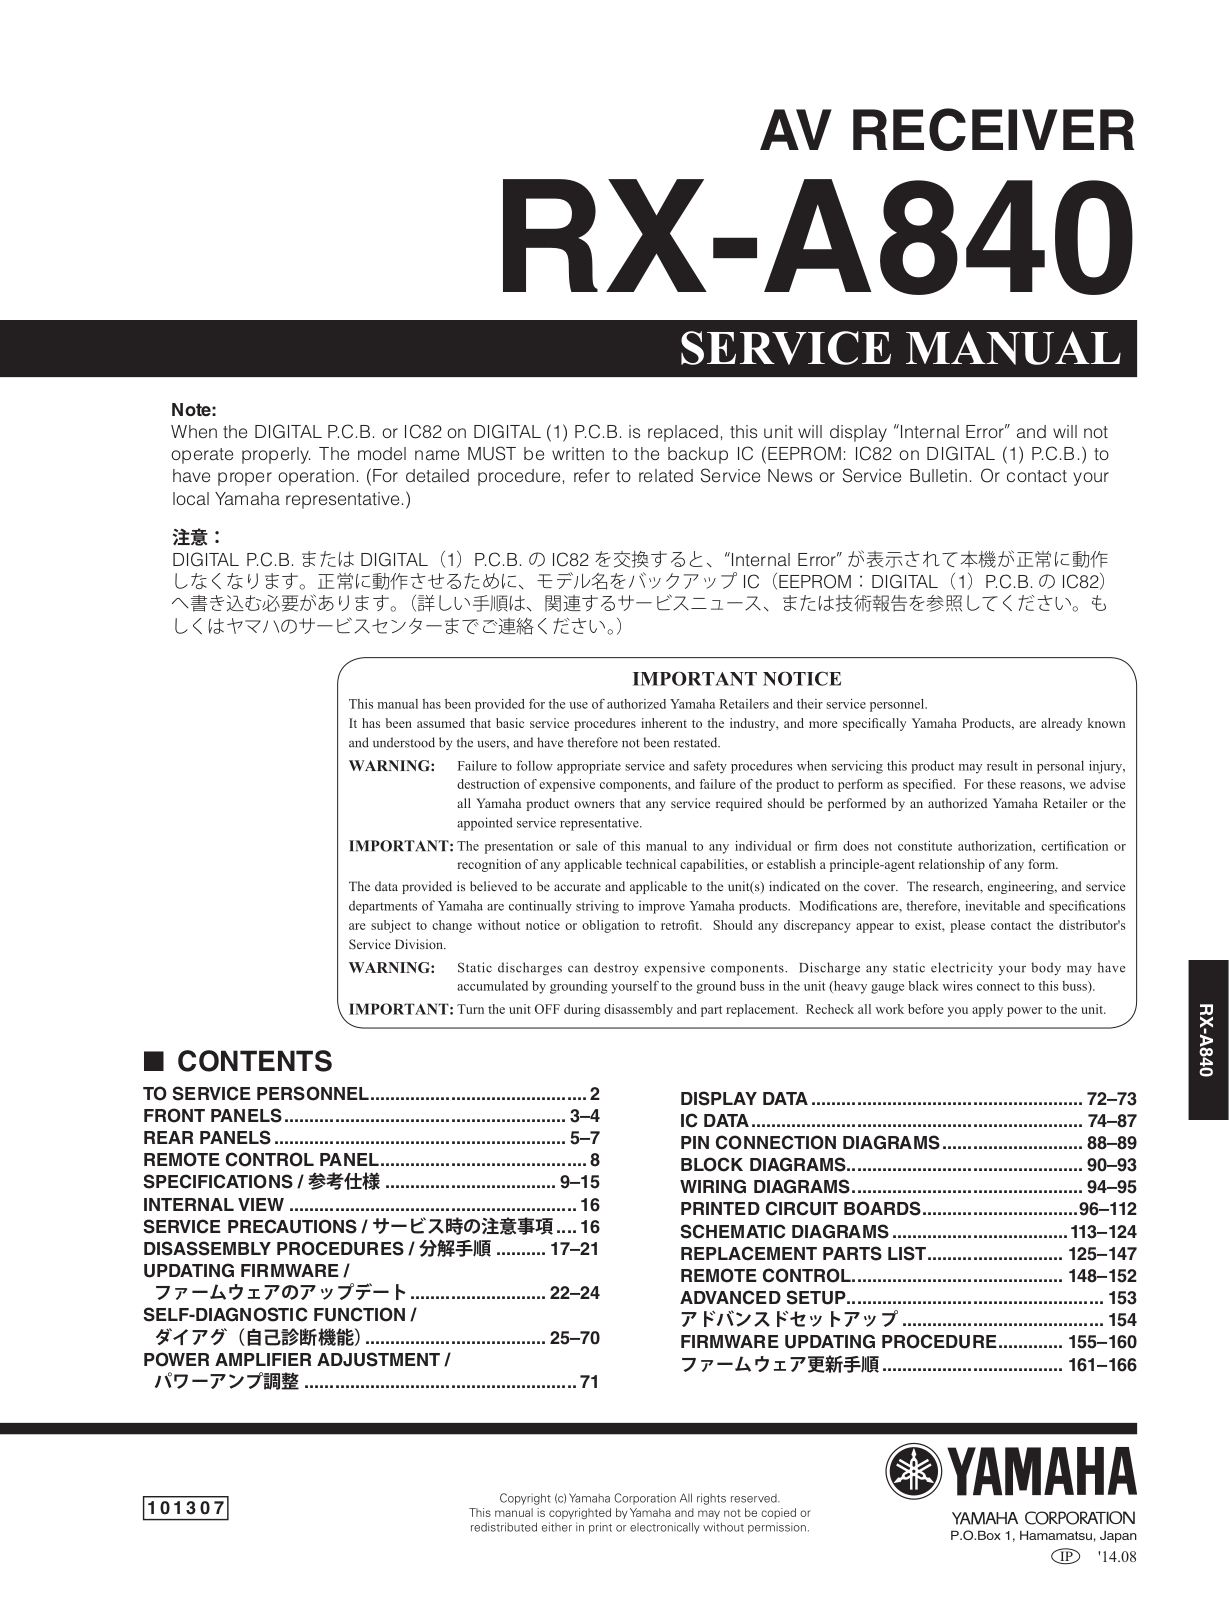 Yamaha RX-A840 Service manual